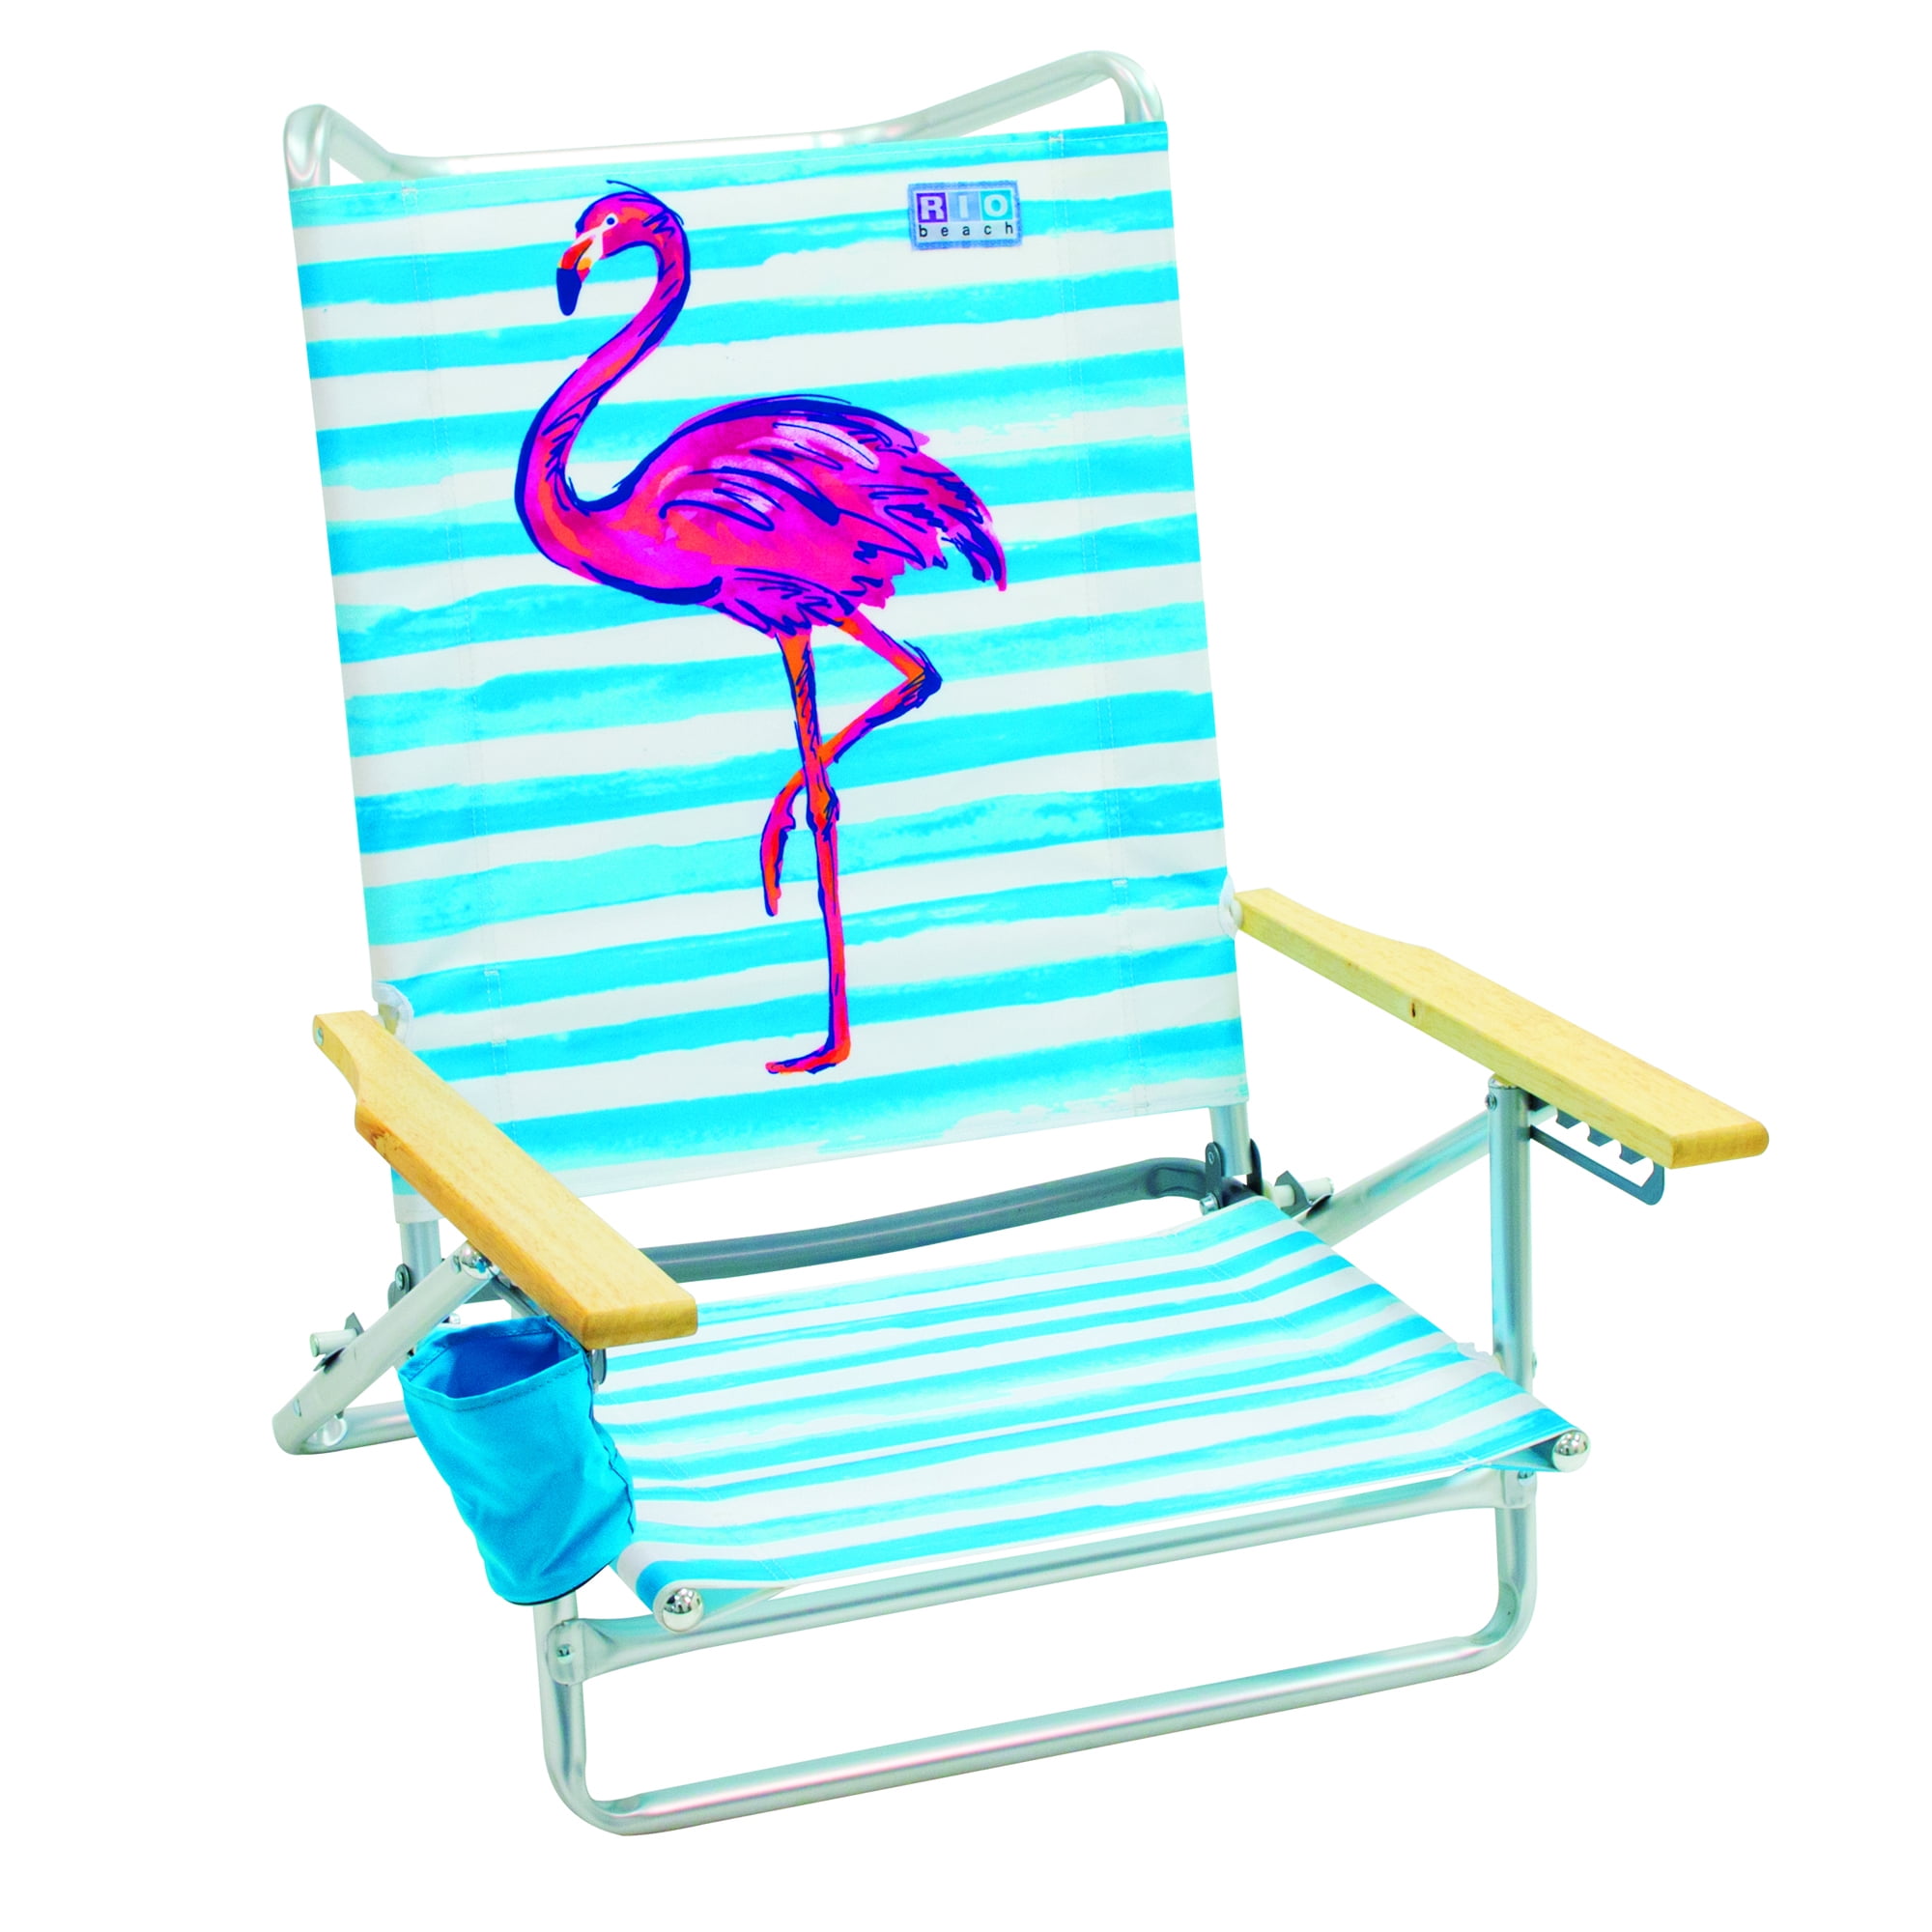  Rio High Back Beach Chair for Small Space